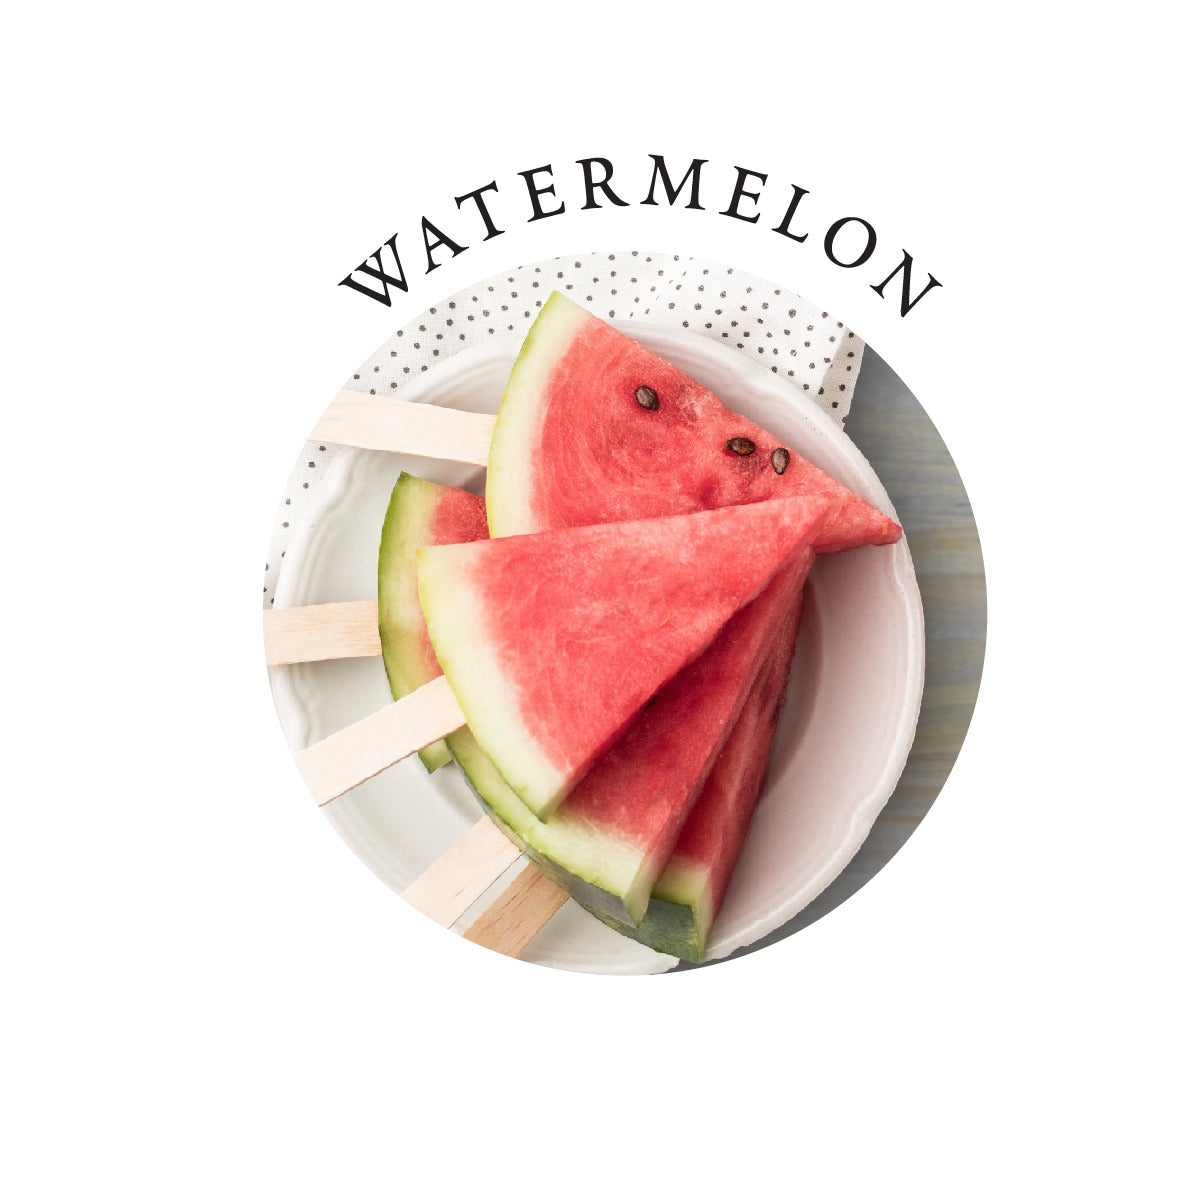 Earthly Body Edible Massage Oil - Watermelon, 8oz/236ml